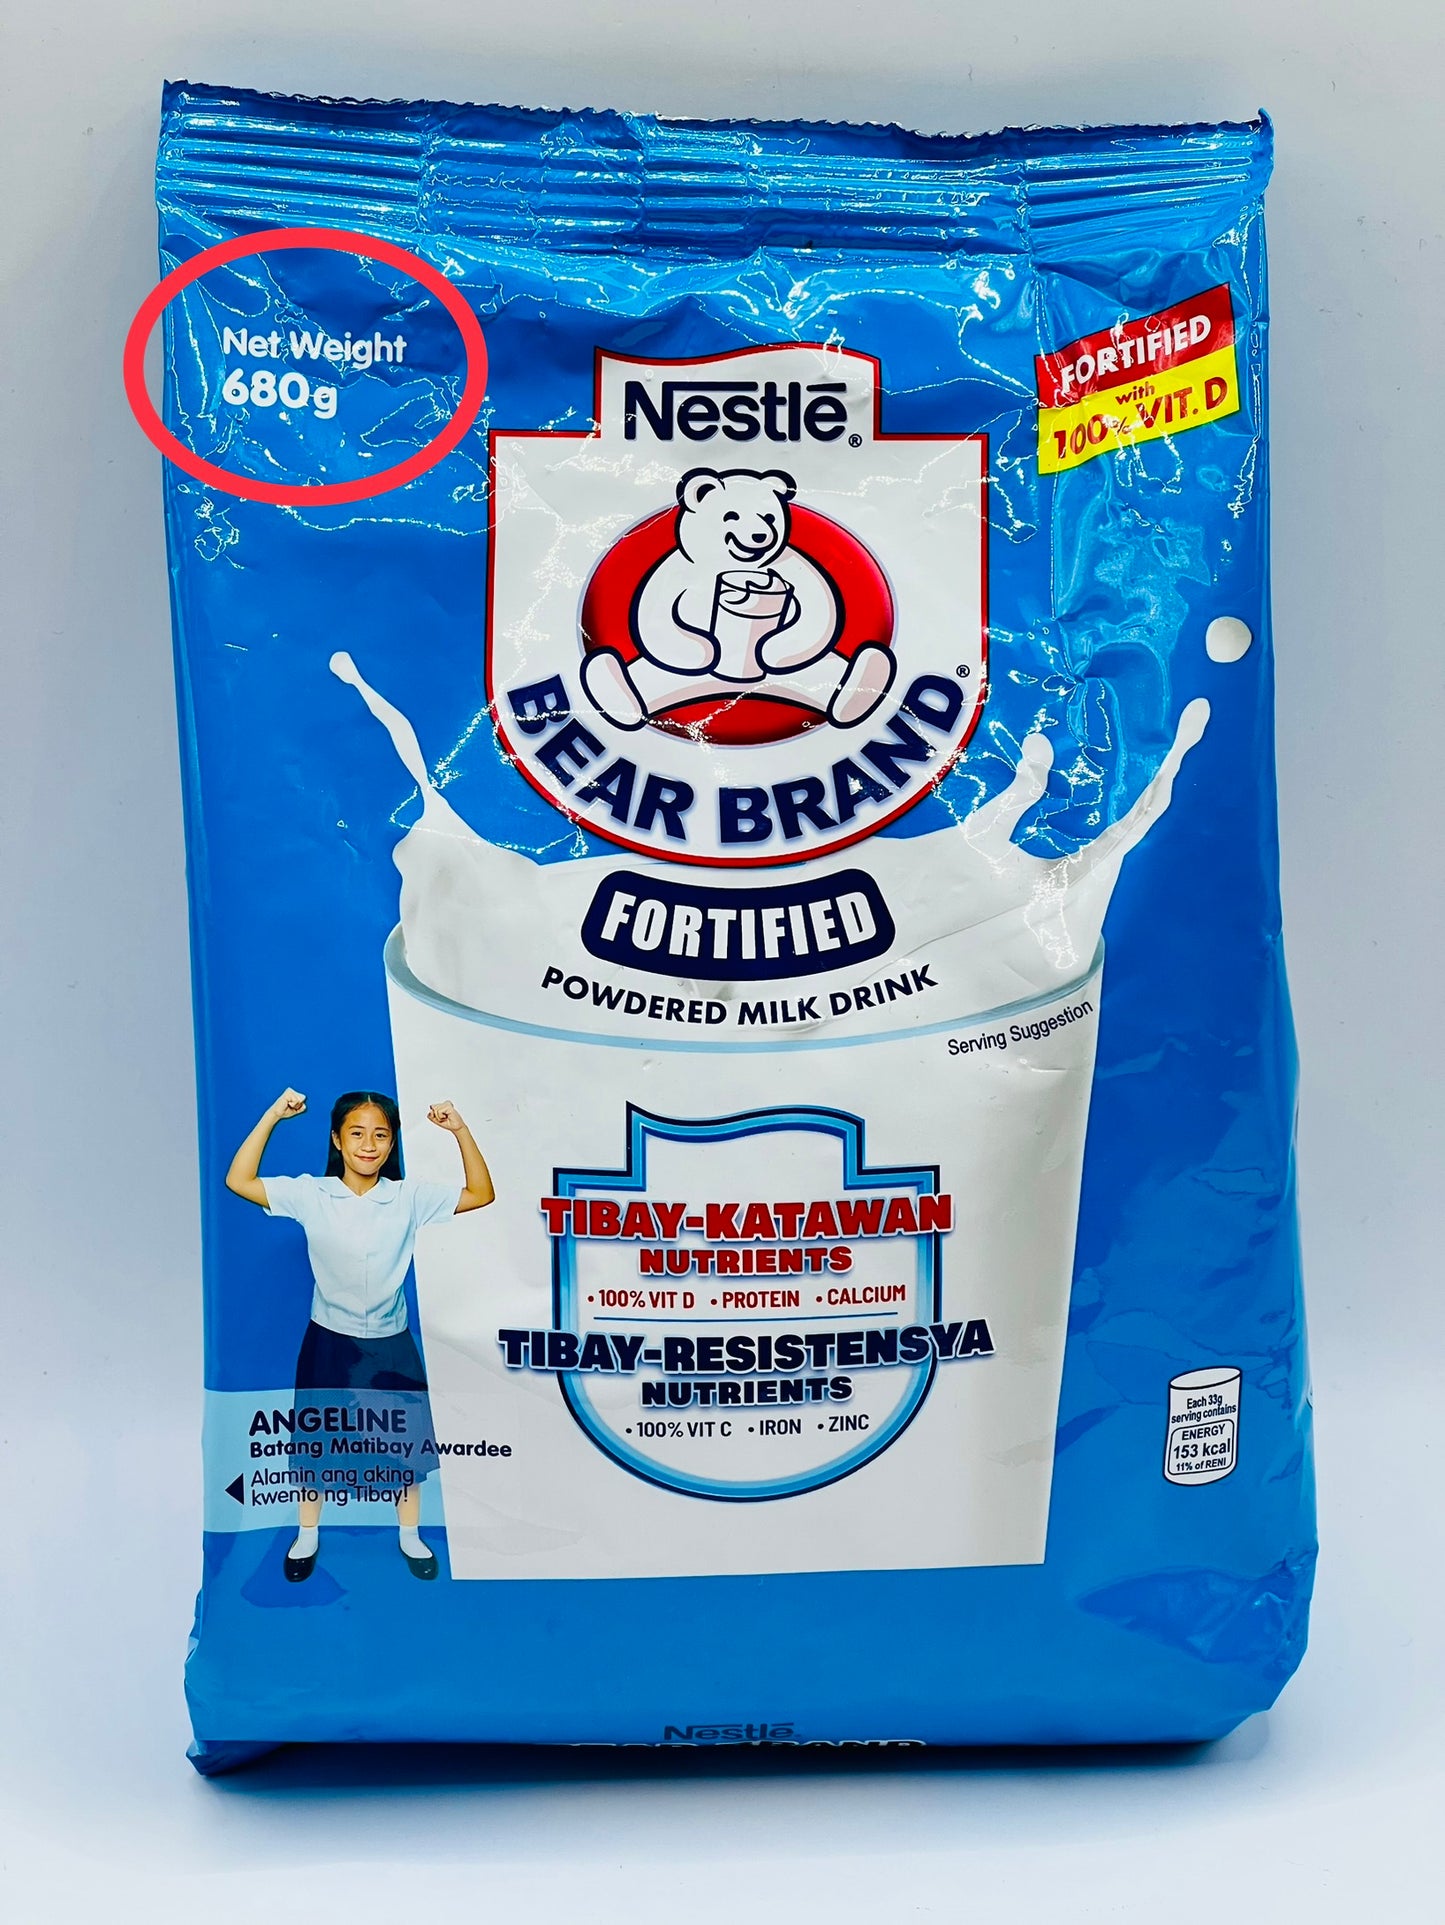 Bear Brand Fortified 680 grams